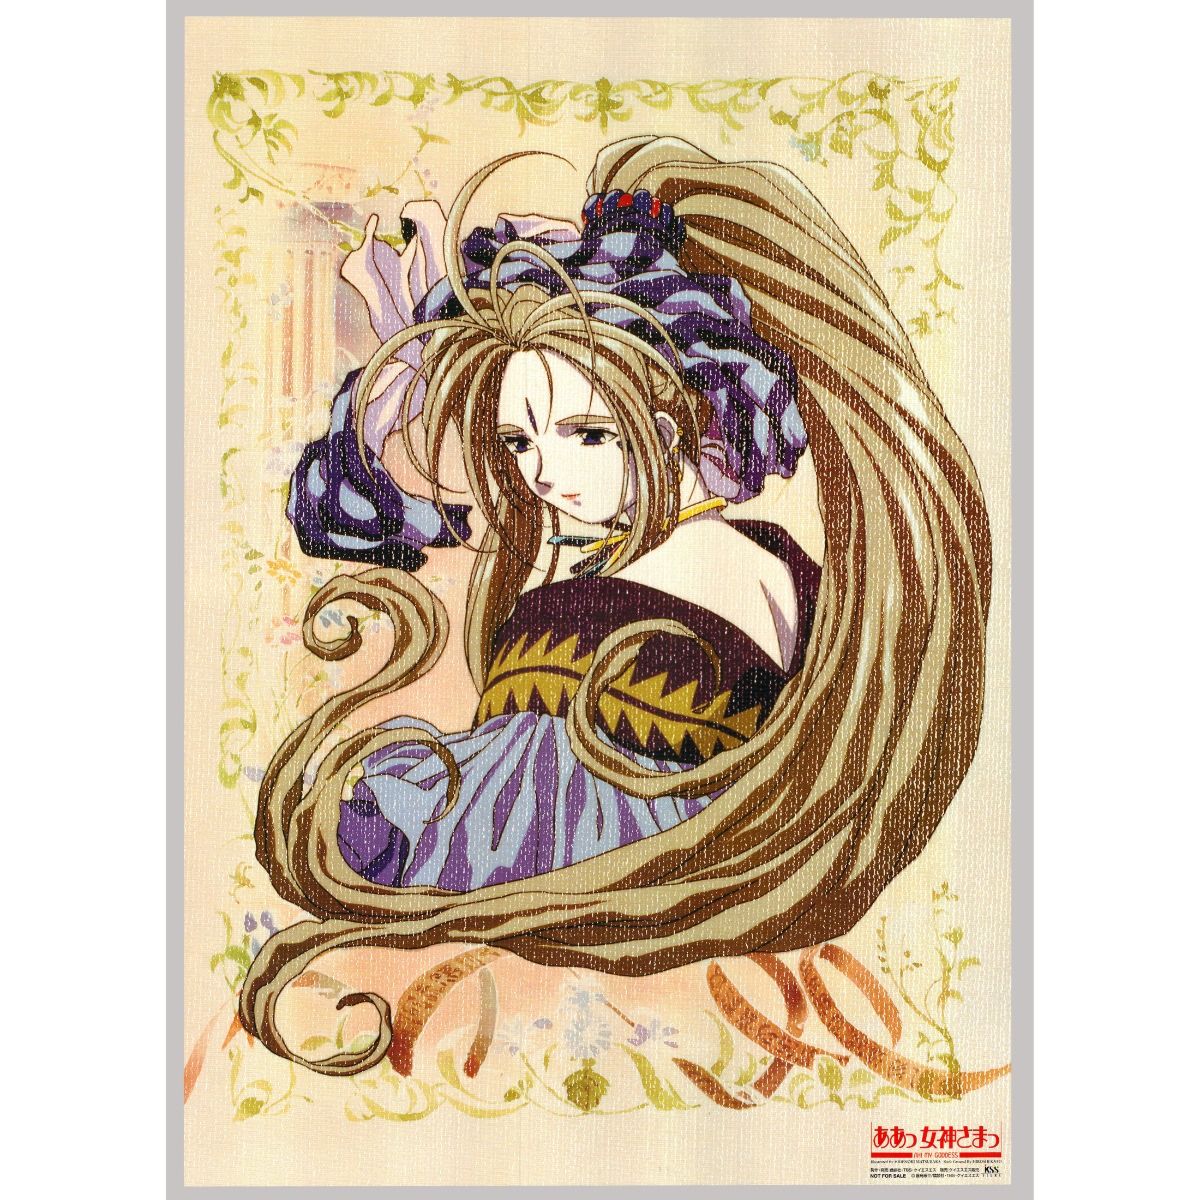 Buy Original Ah! My Goddess Anime Poster Online